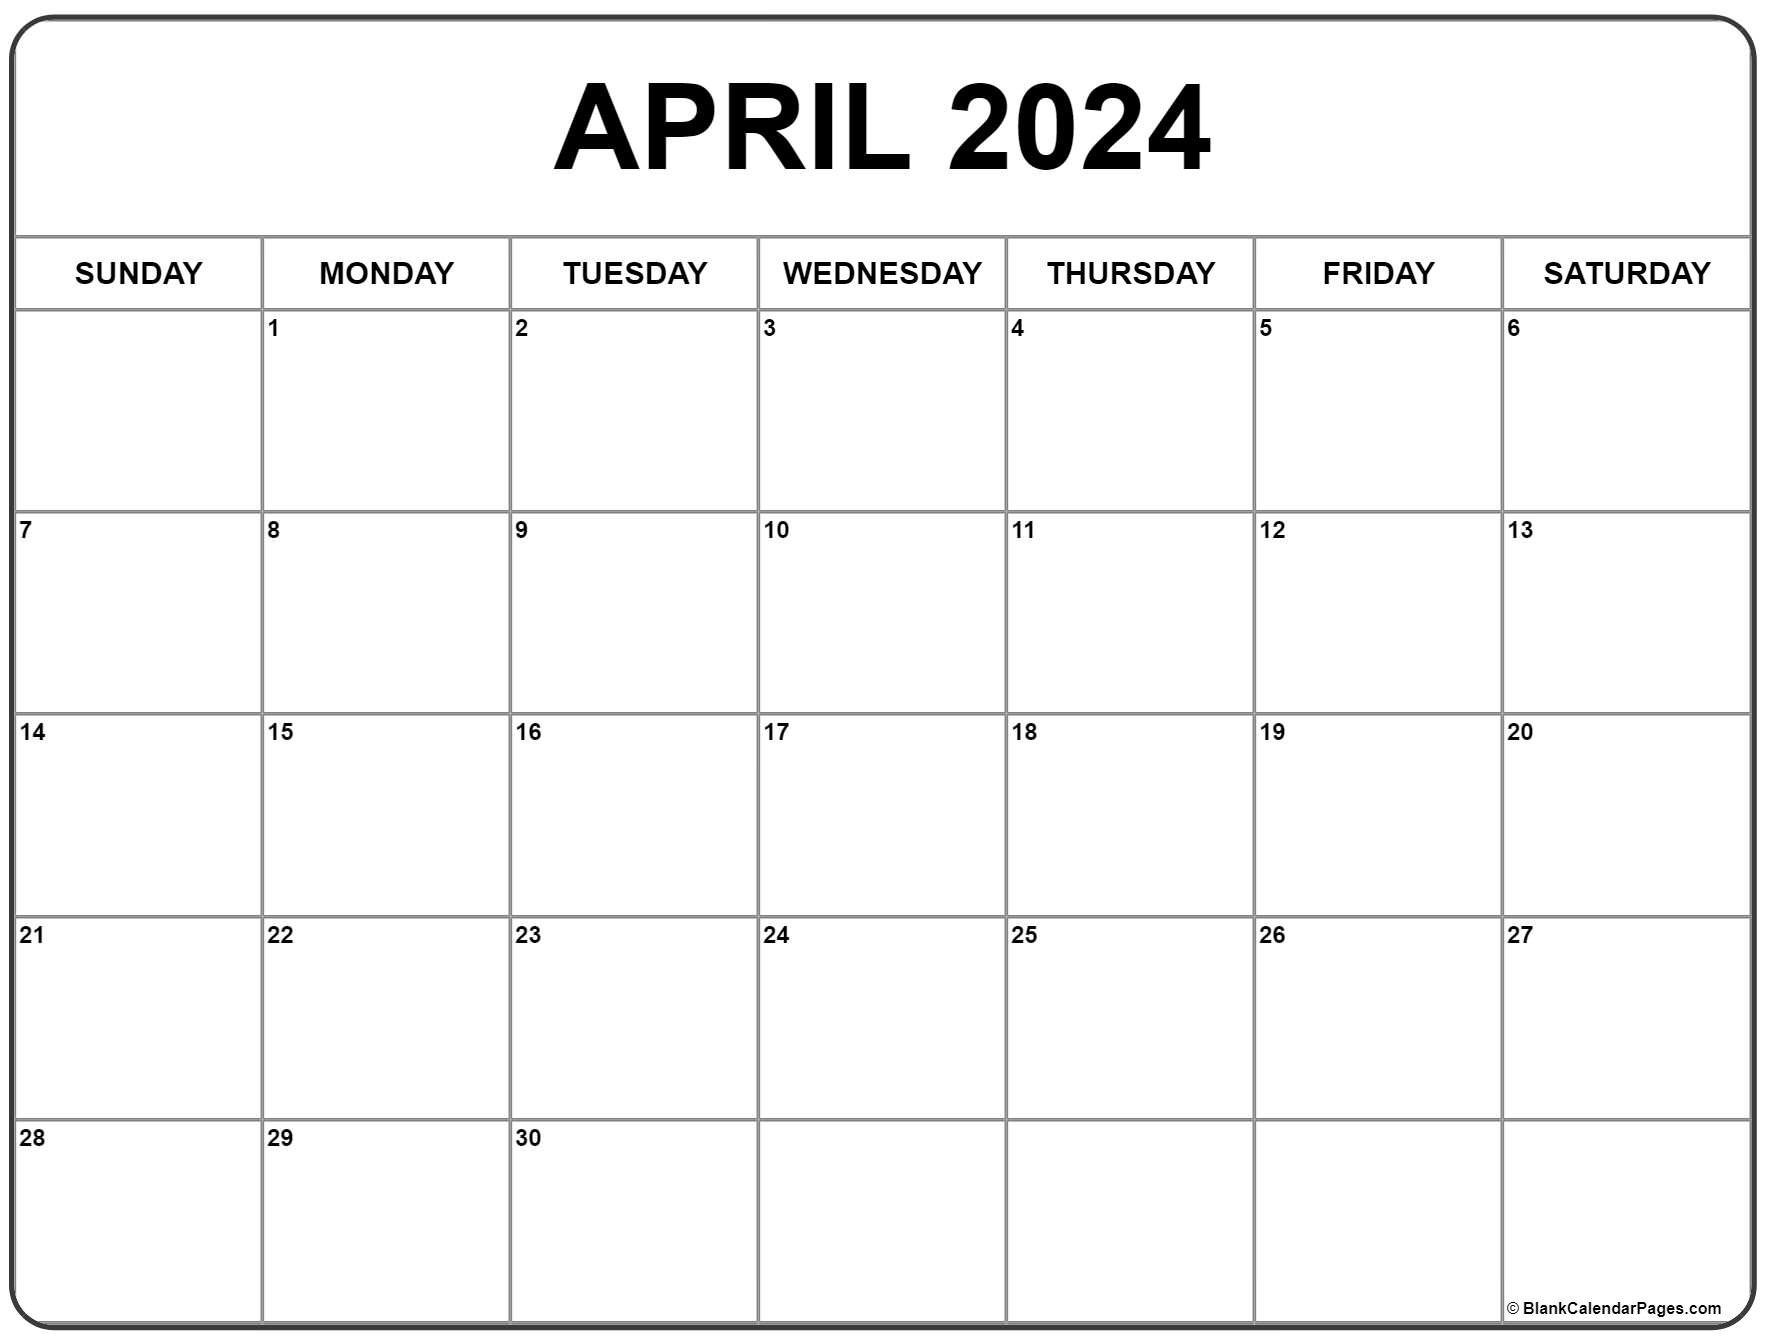 April 2024 Calendar | Free Printable Calendar for 2024 Calendar Printable April